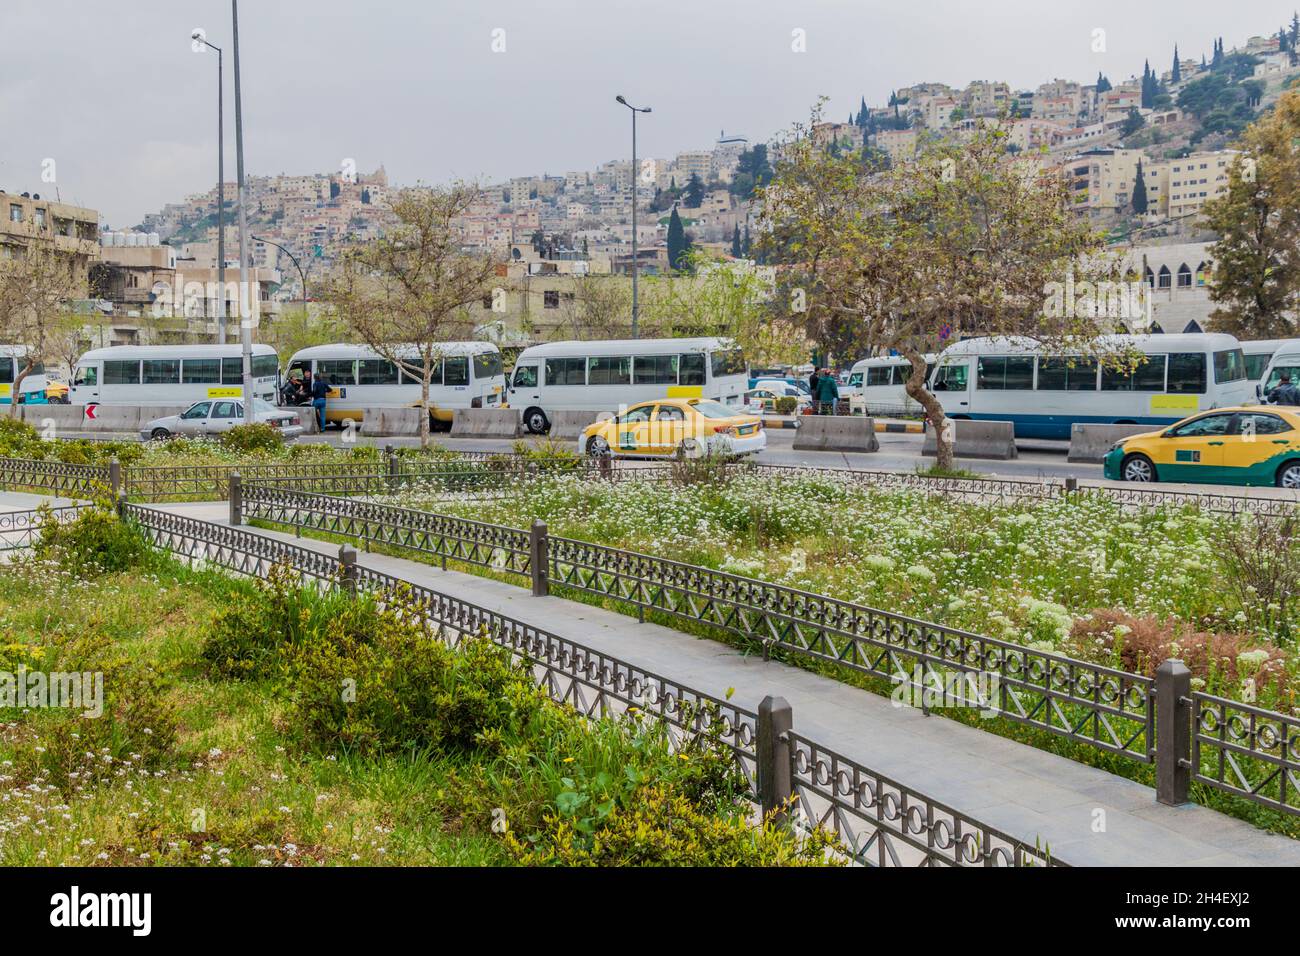 AMMAN, JORDAN - MARCH 23, 2017: Nakheel Square in the center of Amman, Jordan Stock Photo